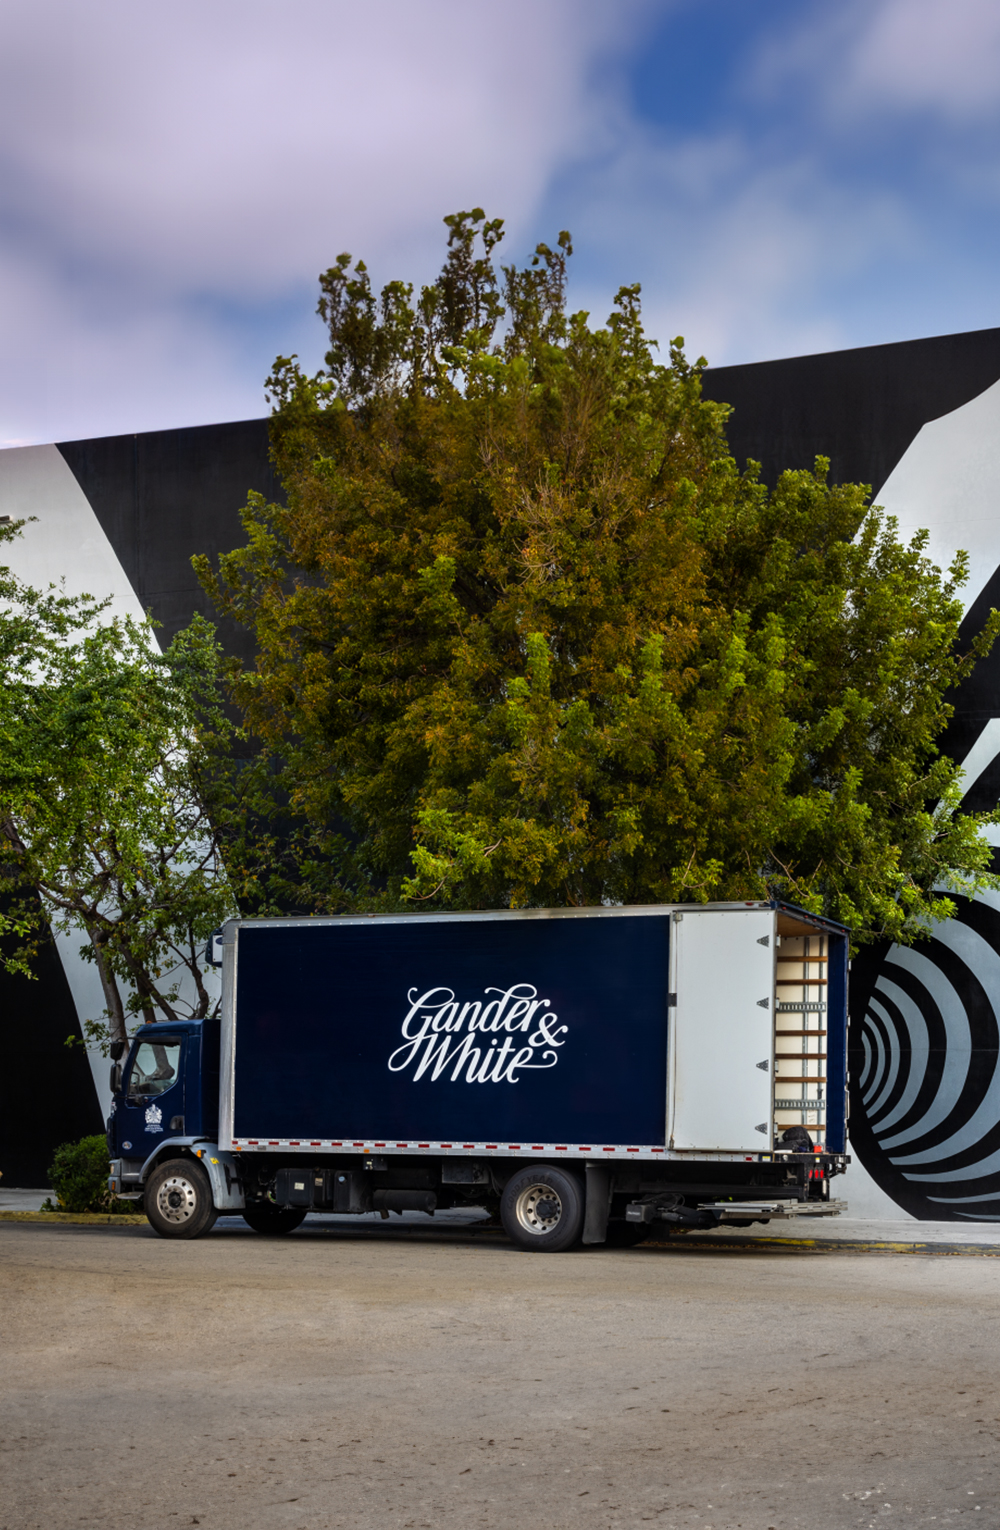 A Gander and White truck in Miami, USA shipping fine art.